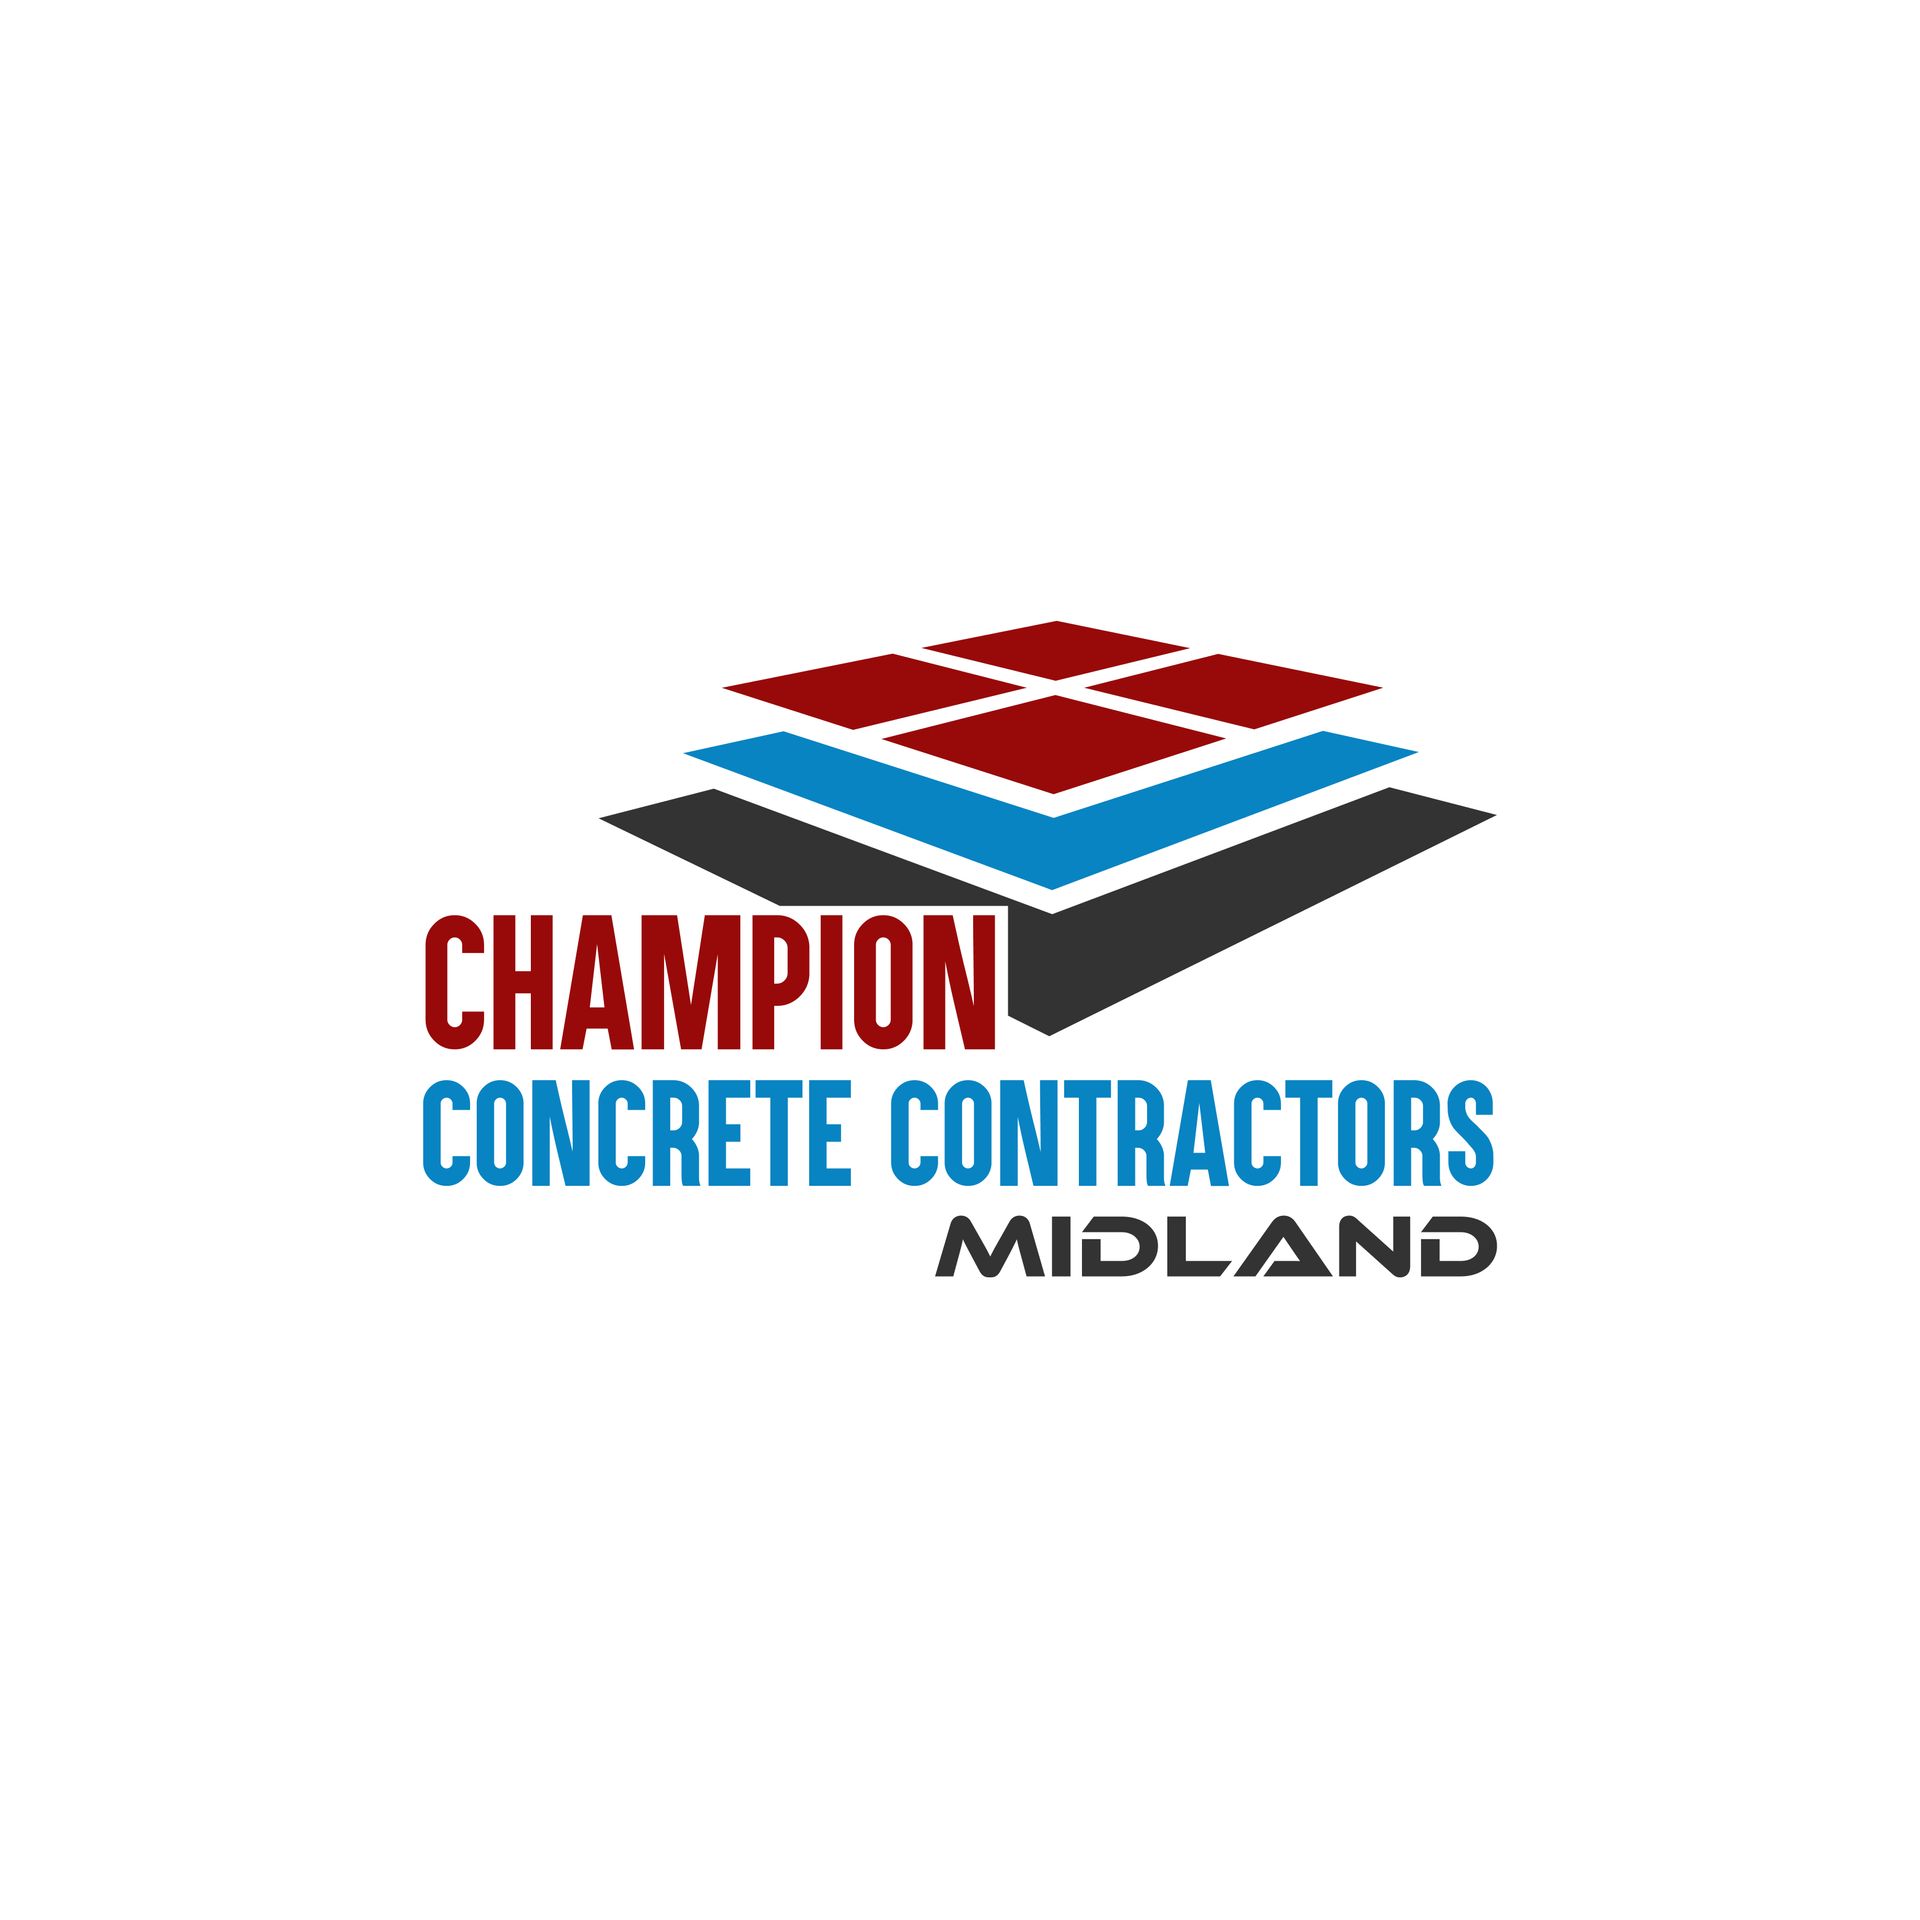 Champion Concrete Contractors Midland TX white background logo